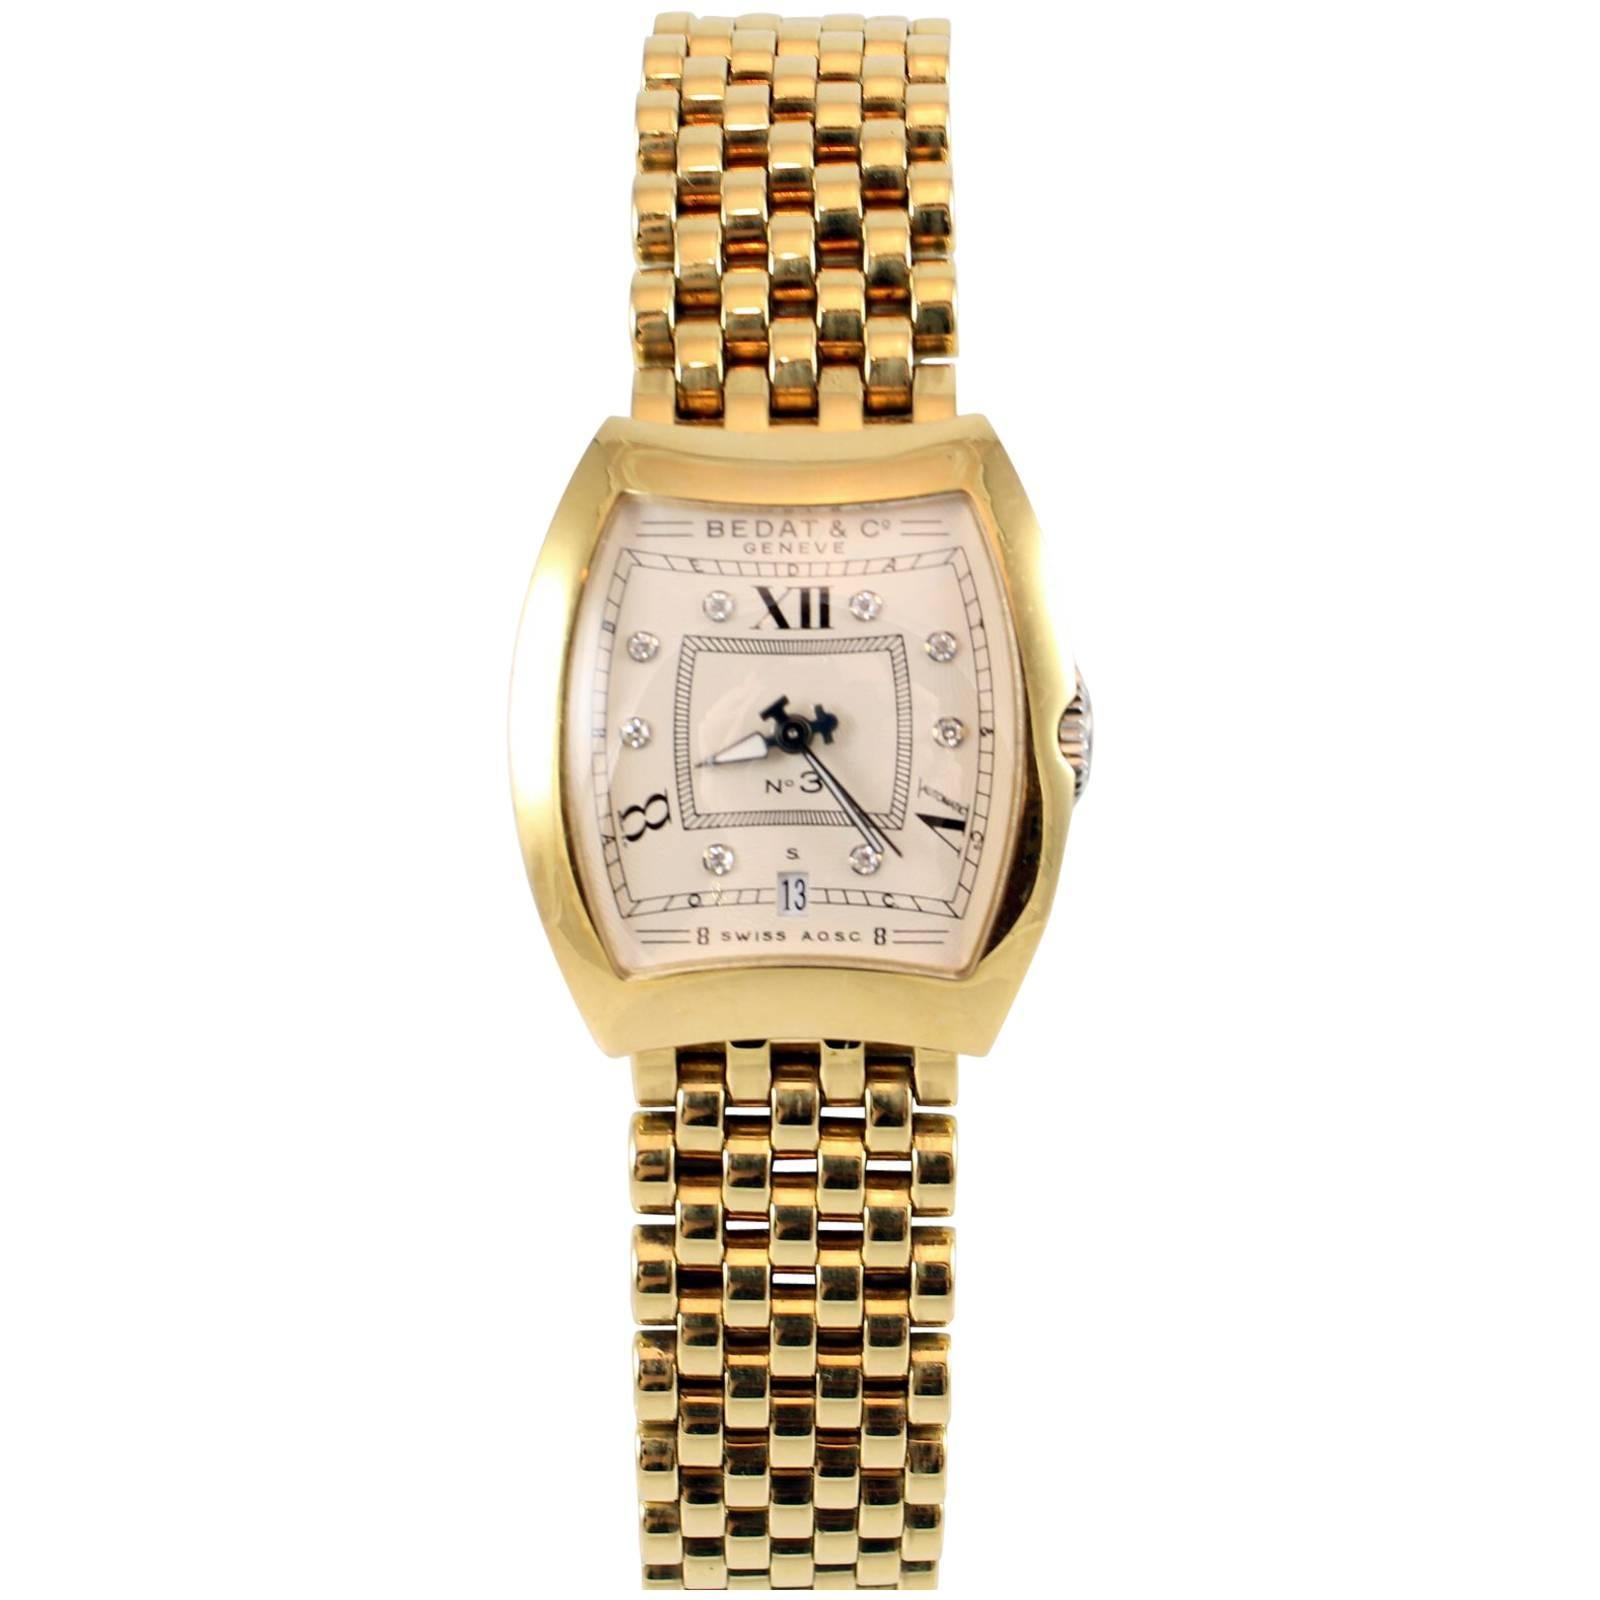 Bedat & Co. yellow Gold Diamond No. 3 Bracelet Wristwatch, Brand New, Never Worn